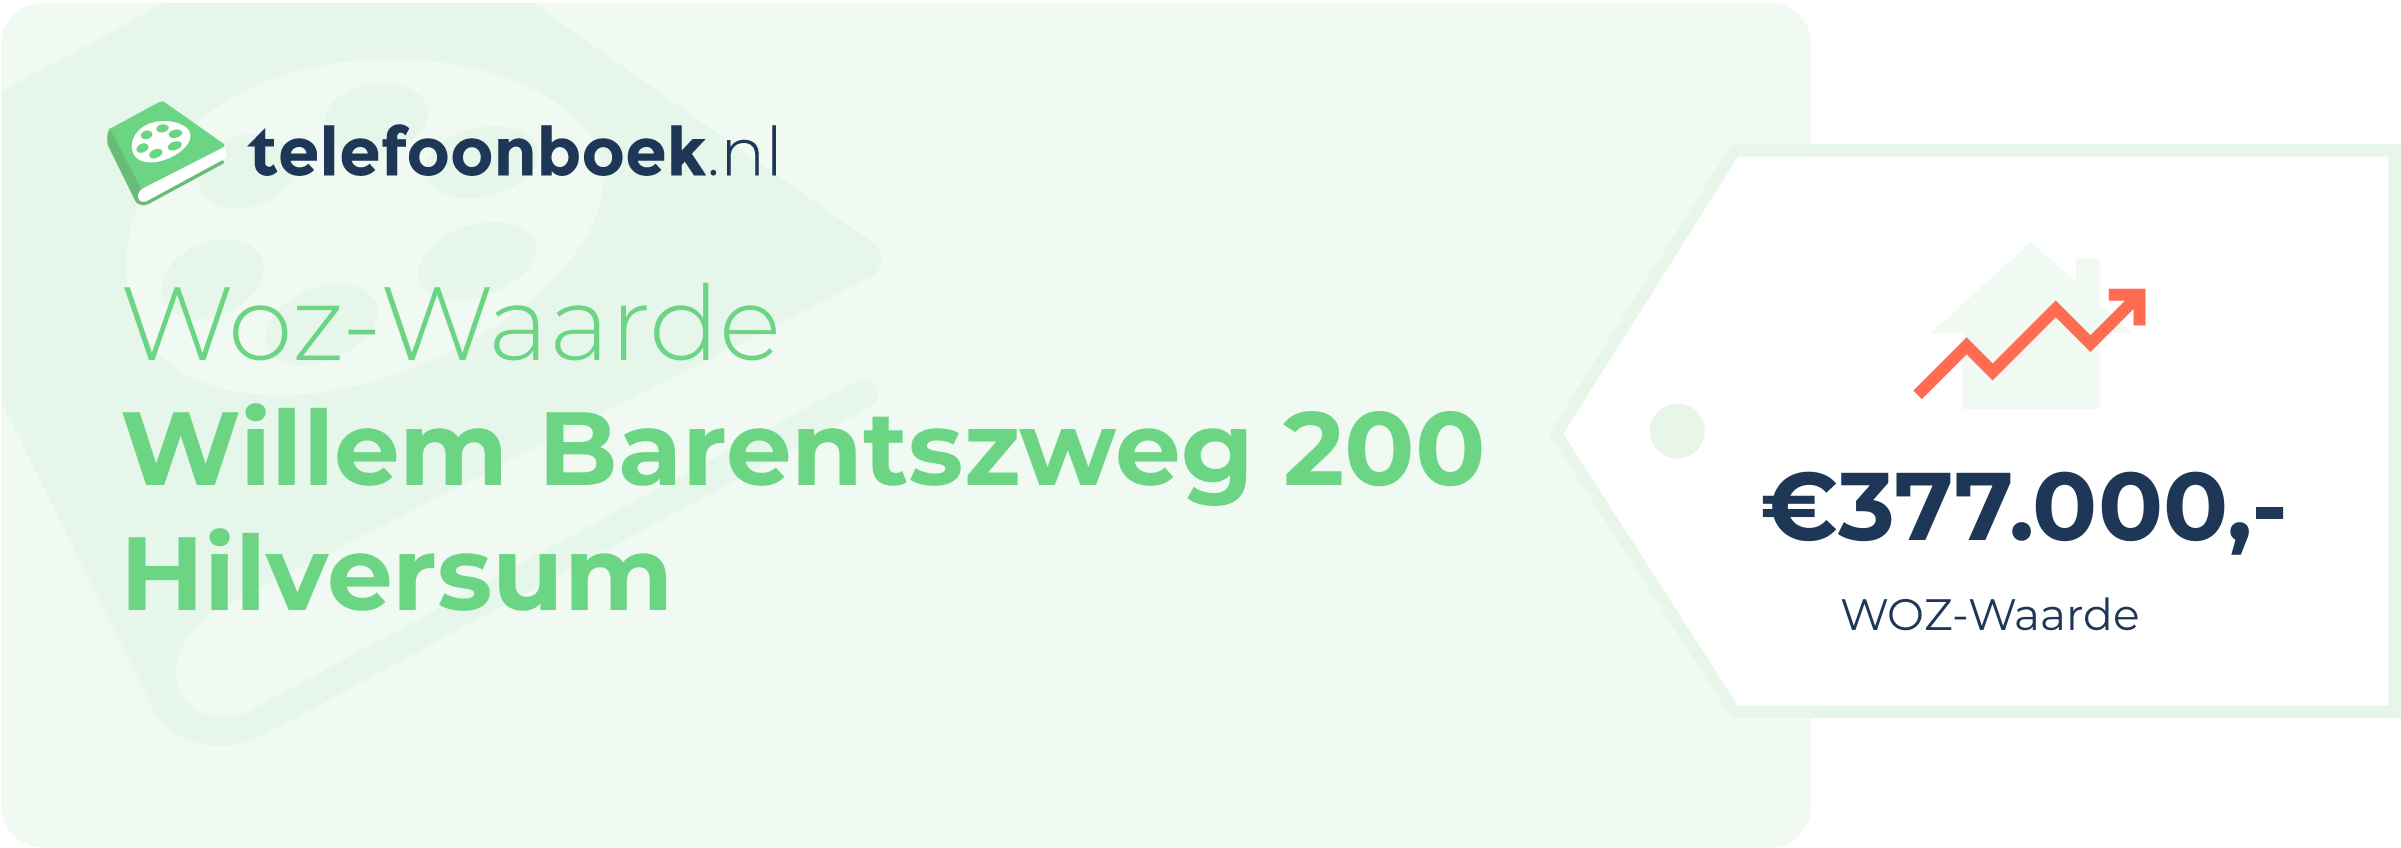 WOZ-waarde Willem Barentszweg 200 Hilversum